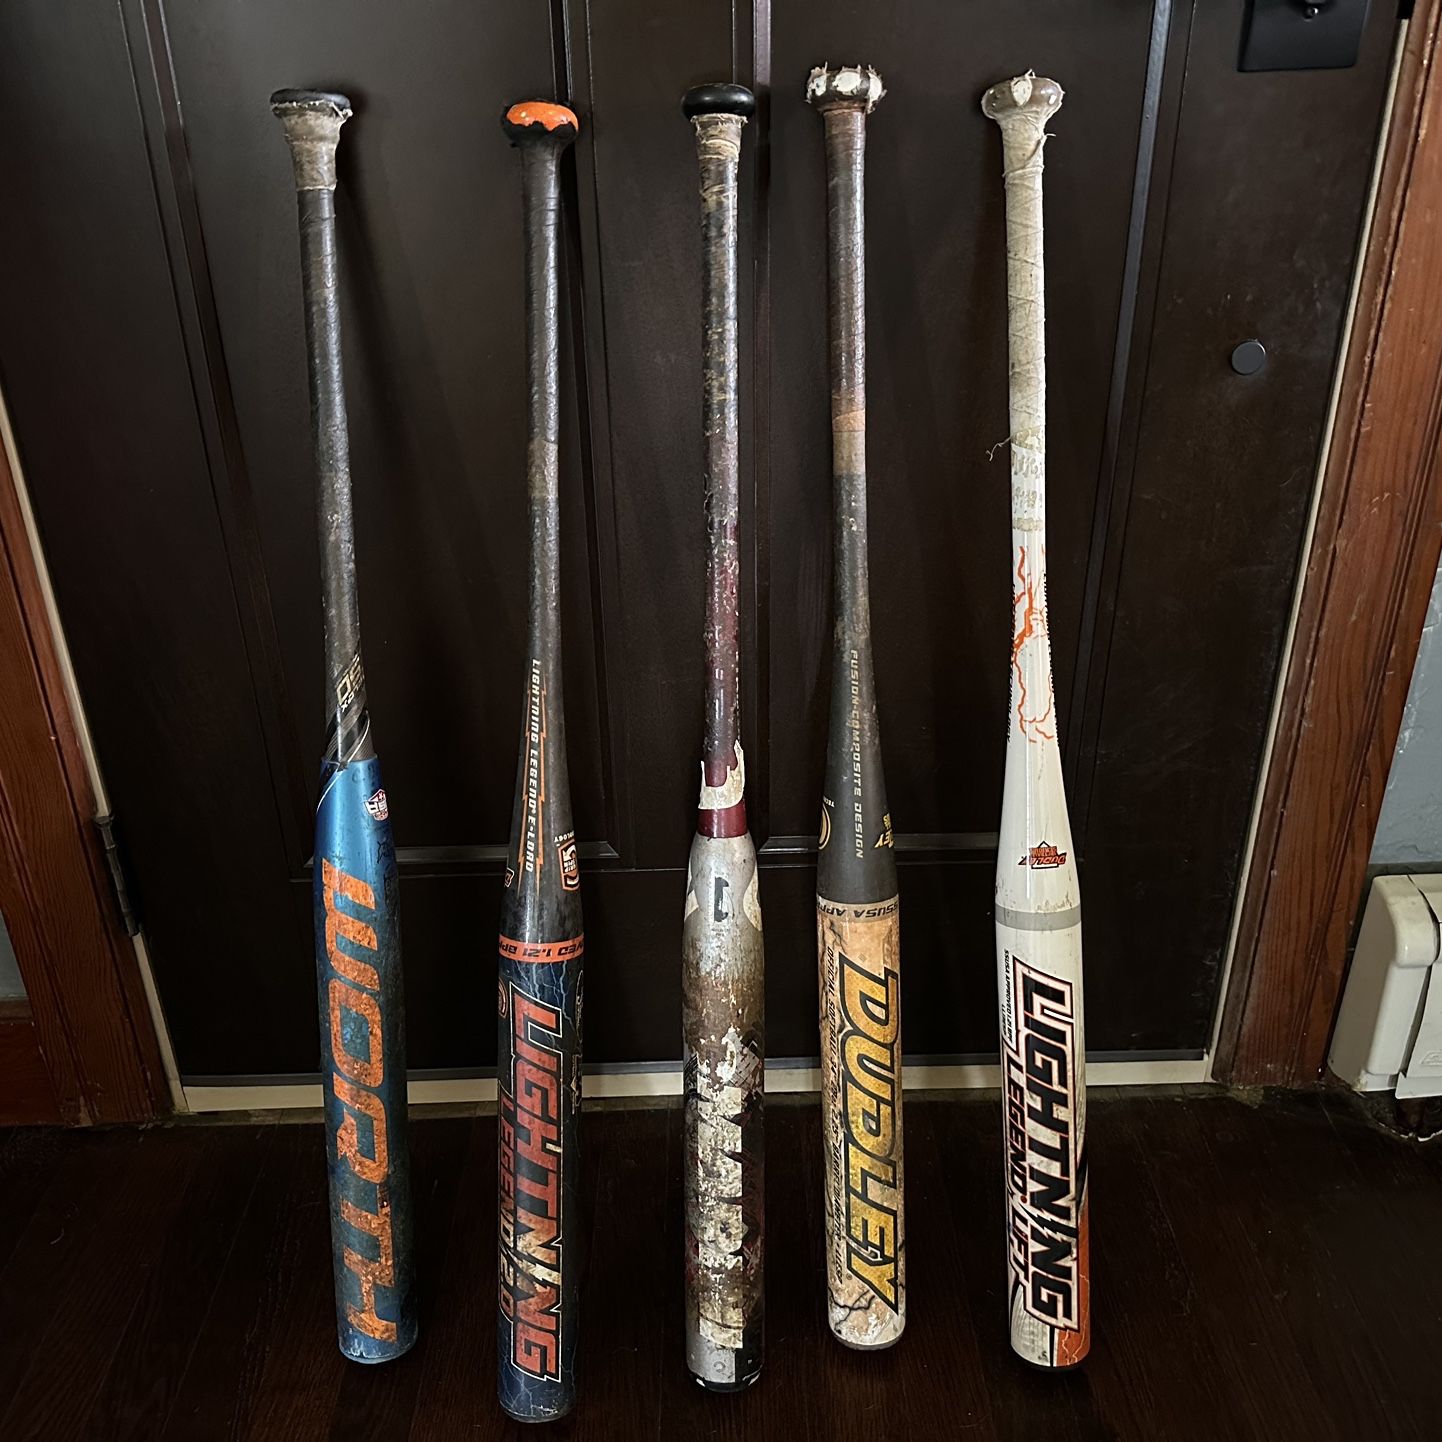 Senior Softball Bats